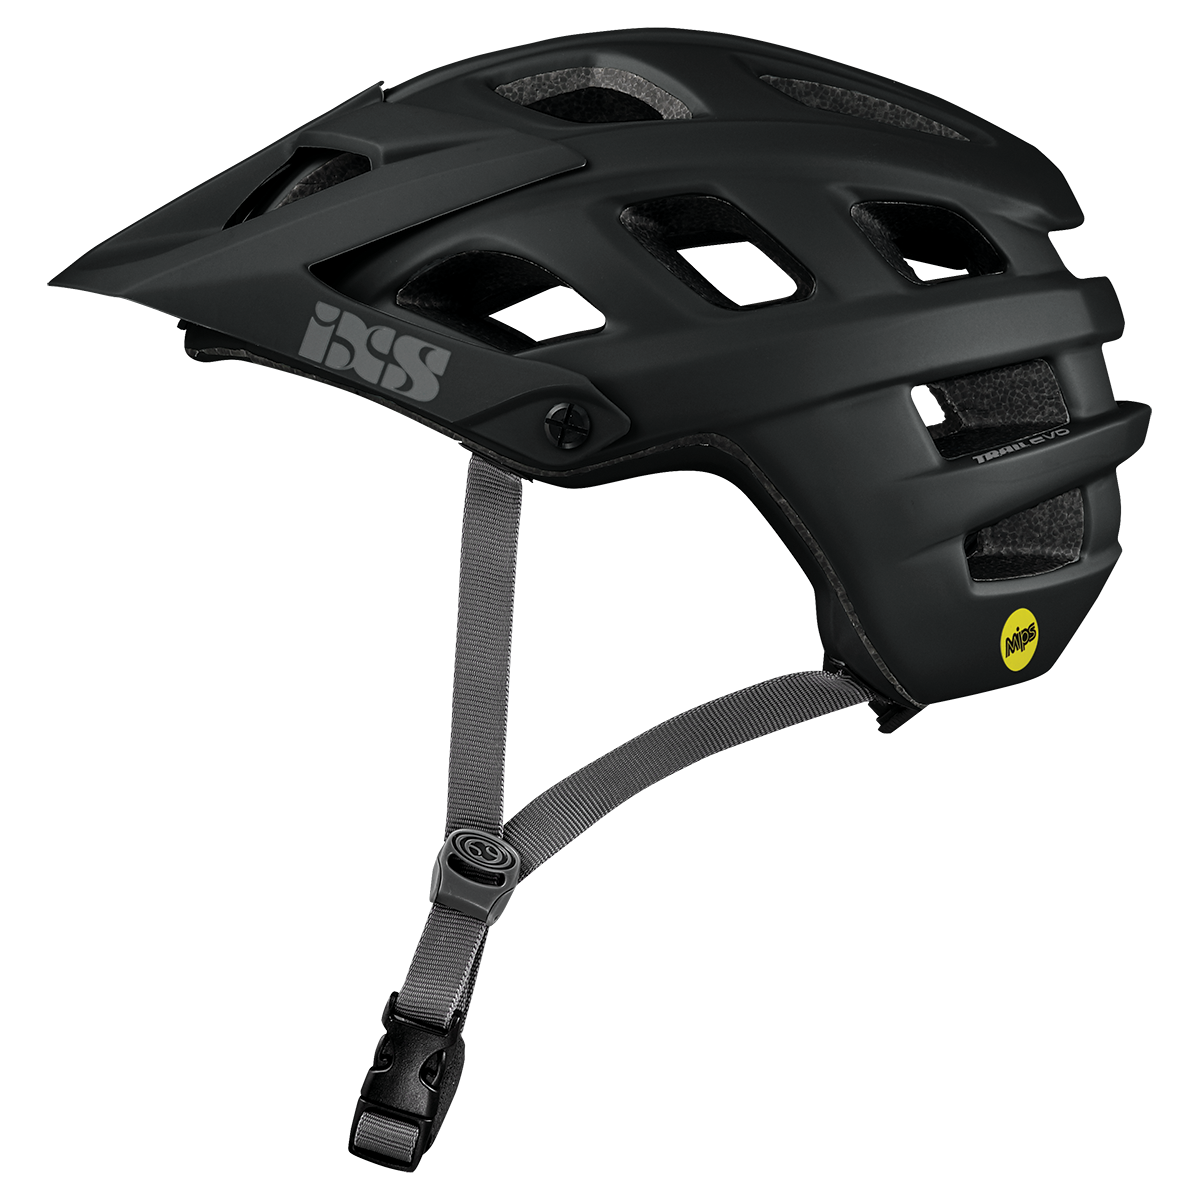 Trail Evo MIPS Helmet – The Gravity Cartel